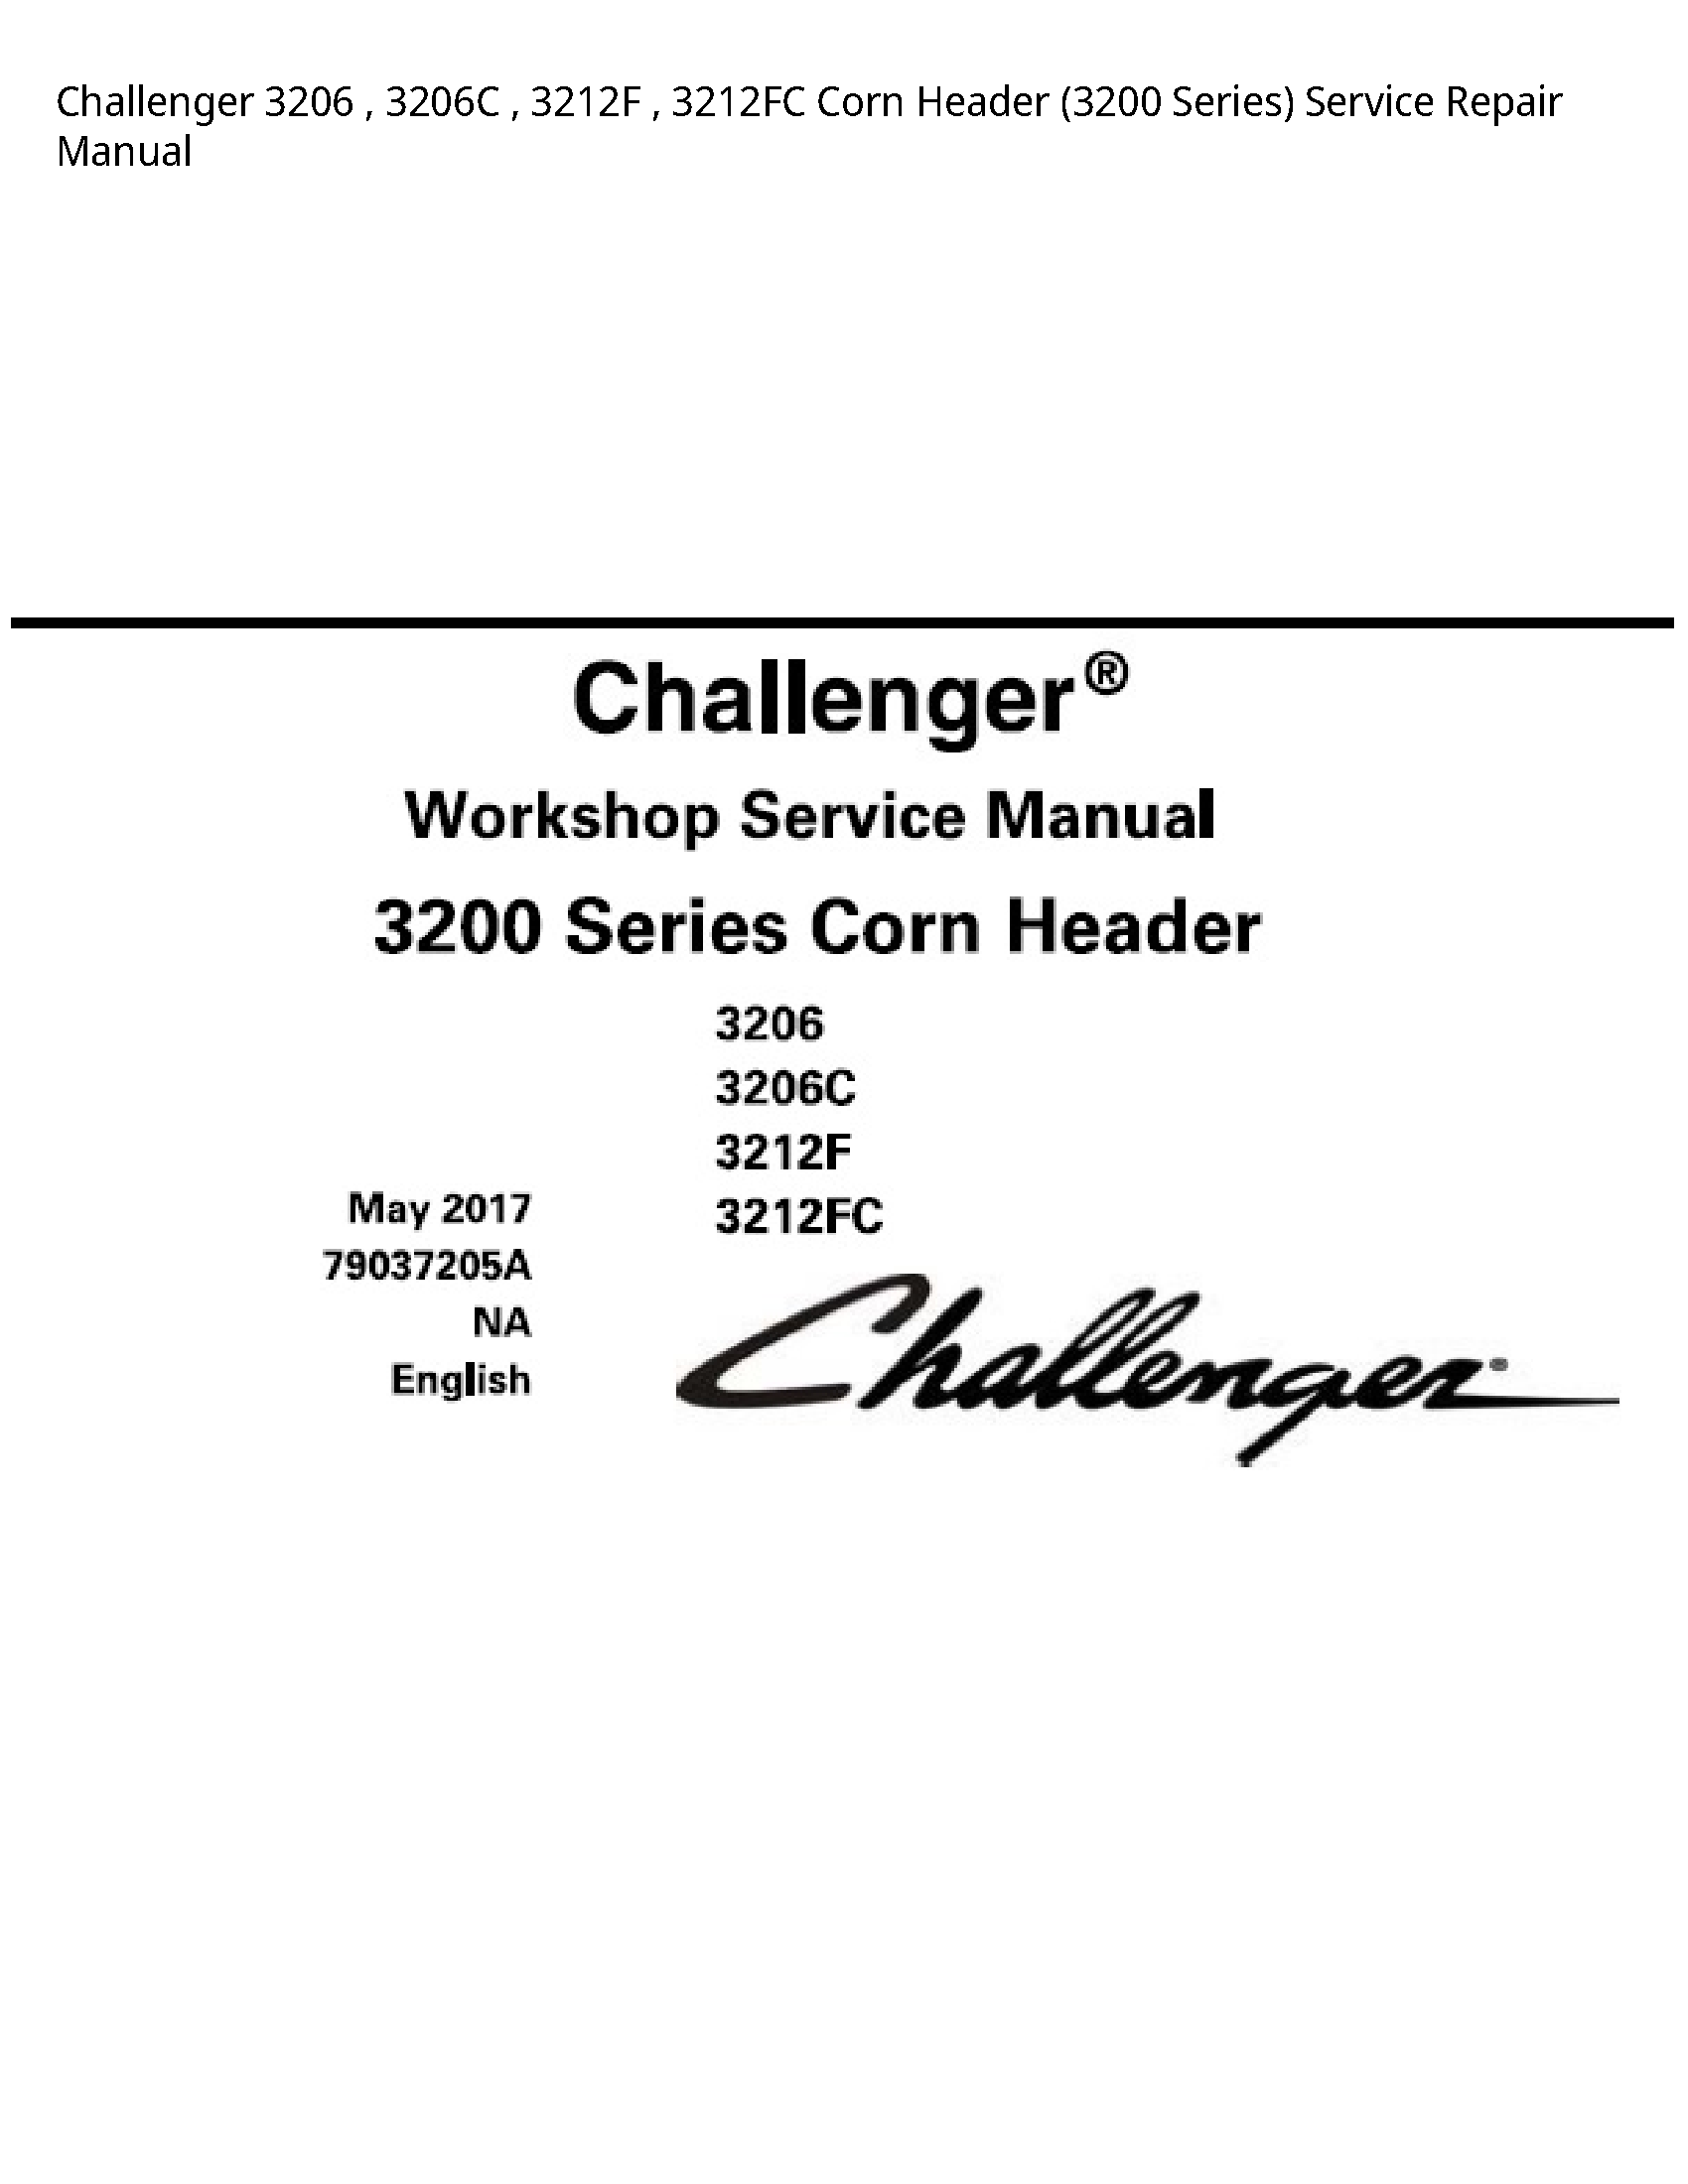 Challenger 3206 Corn Header Series) manual